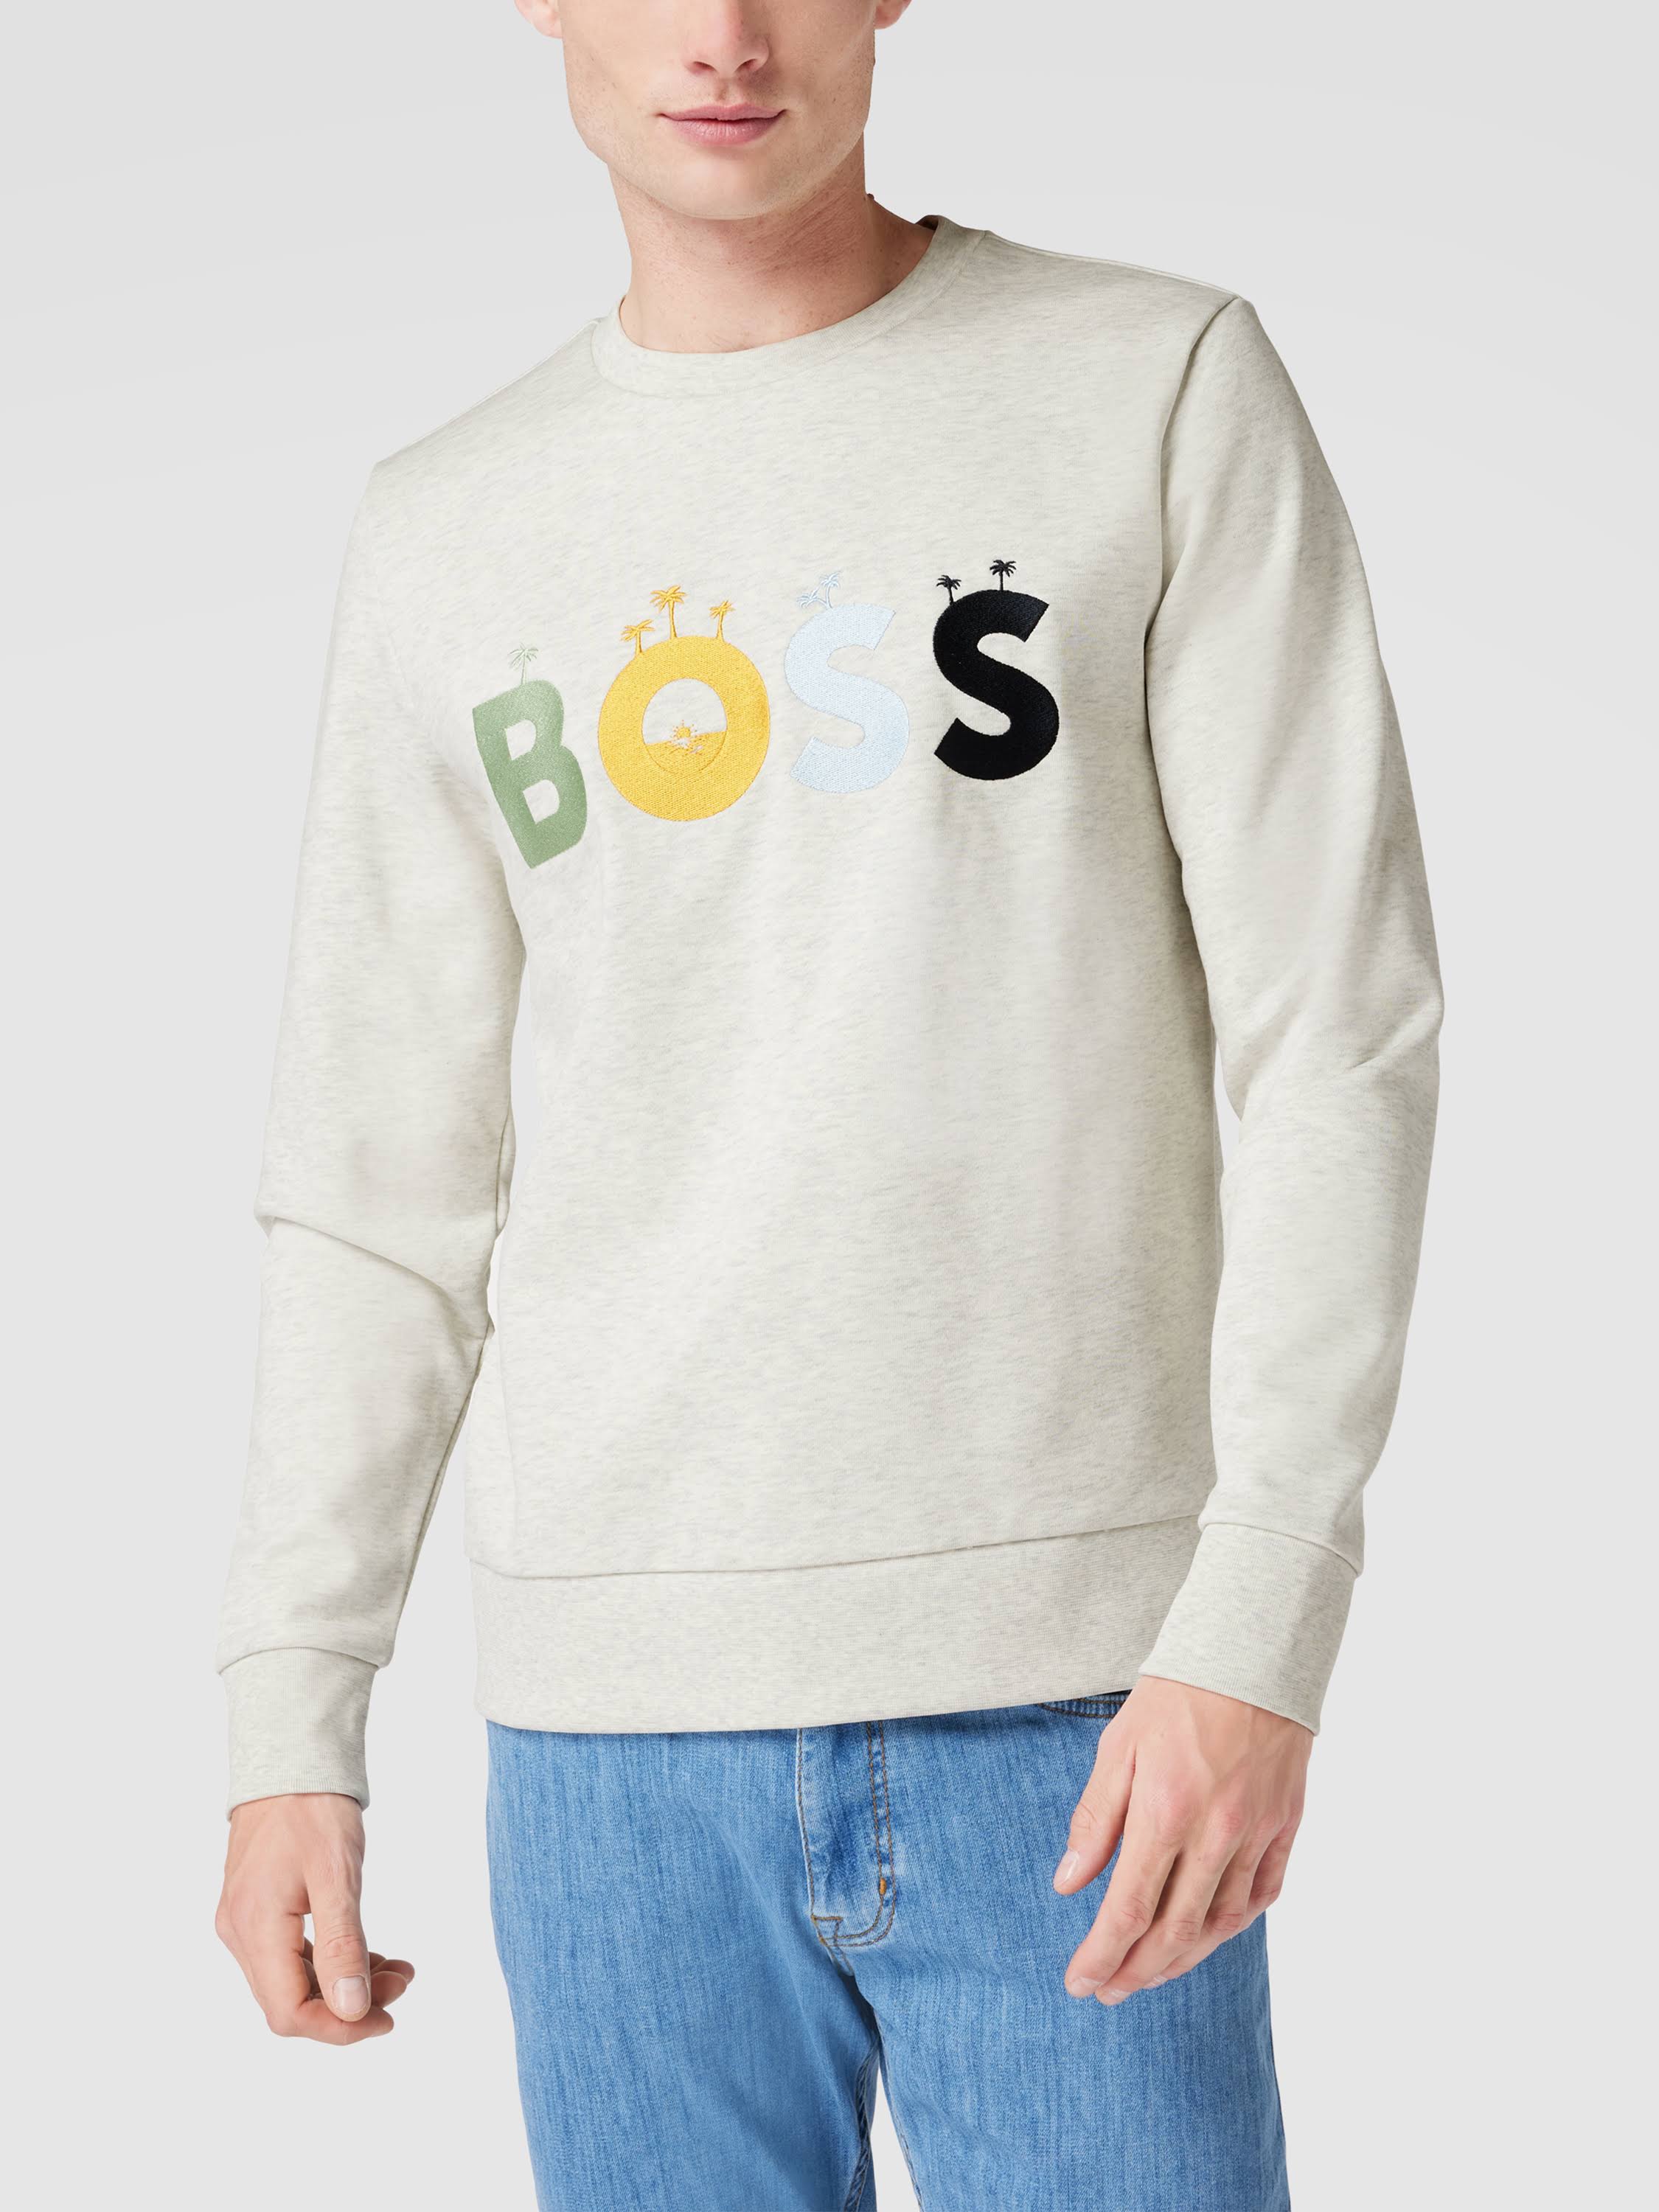 Hugo Boss Grey Cotton Logo Details Sweatshirt